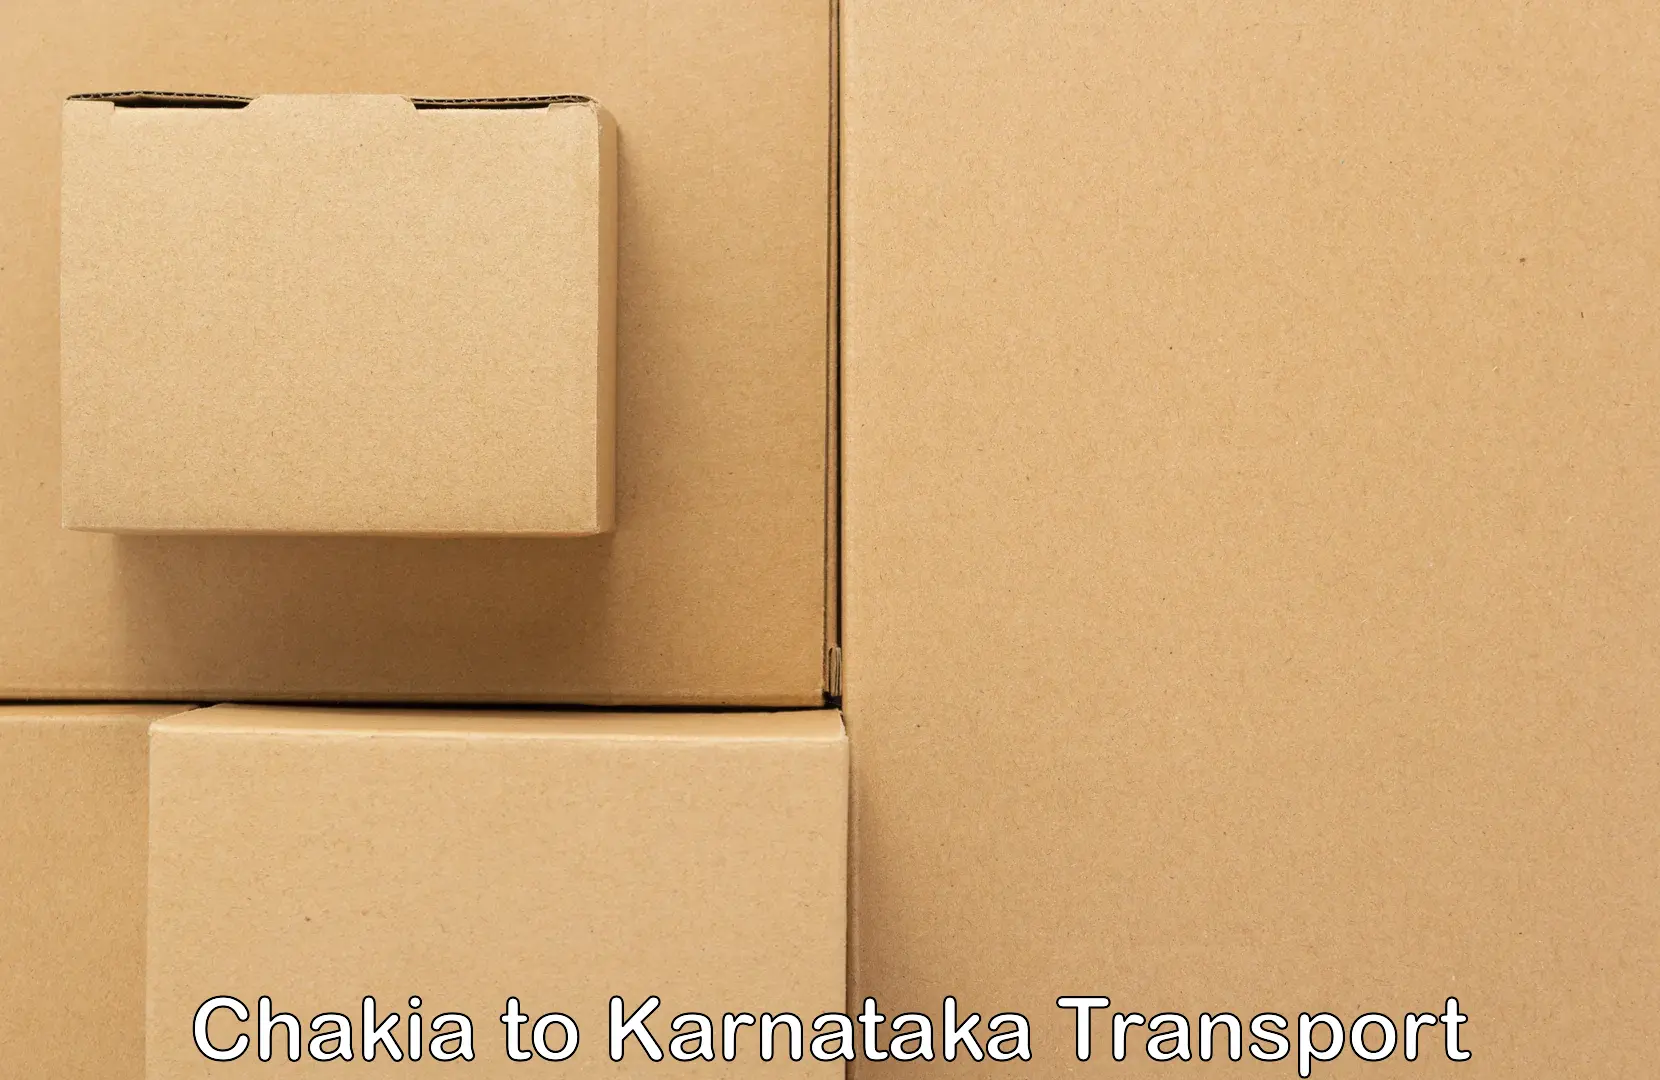 Container transport service Chakia to Mysore